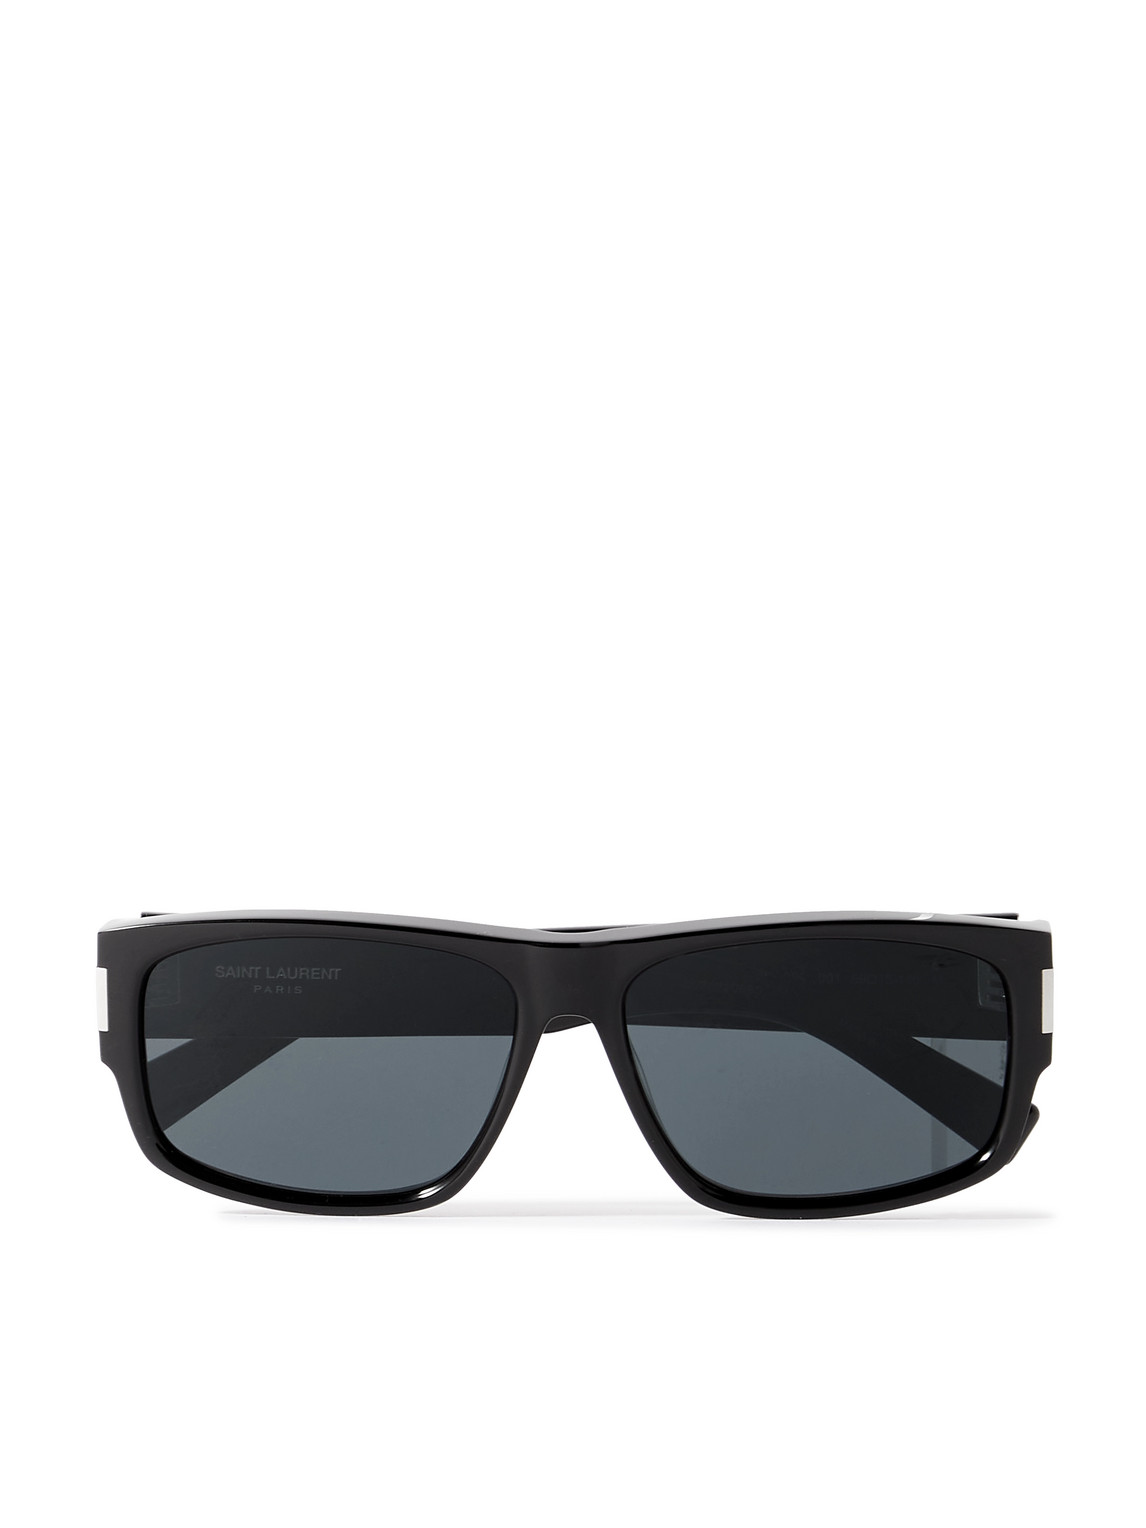 Saint Laurent New Wave D-frame Acetate Sunglasses In Black